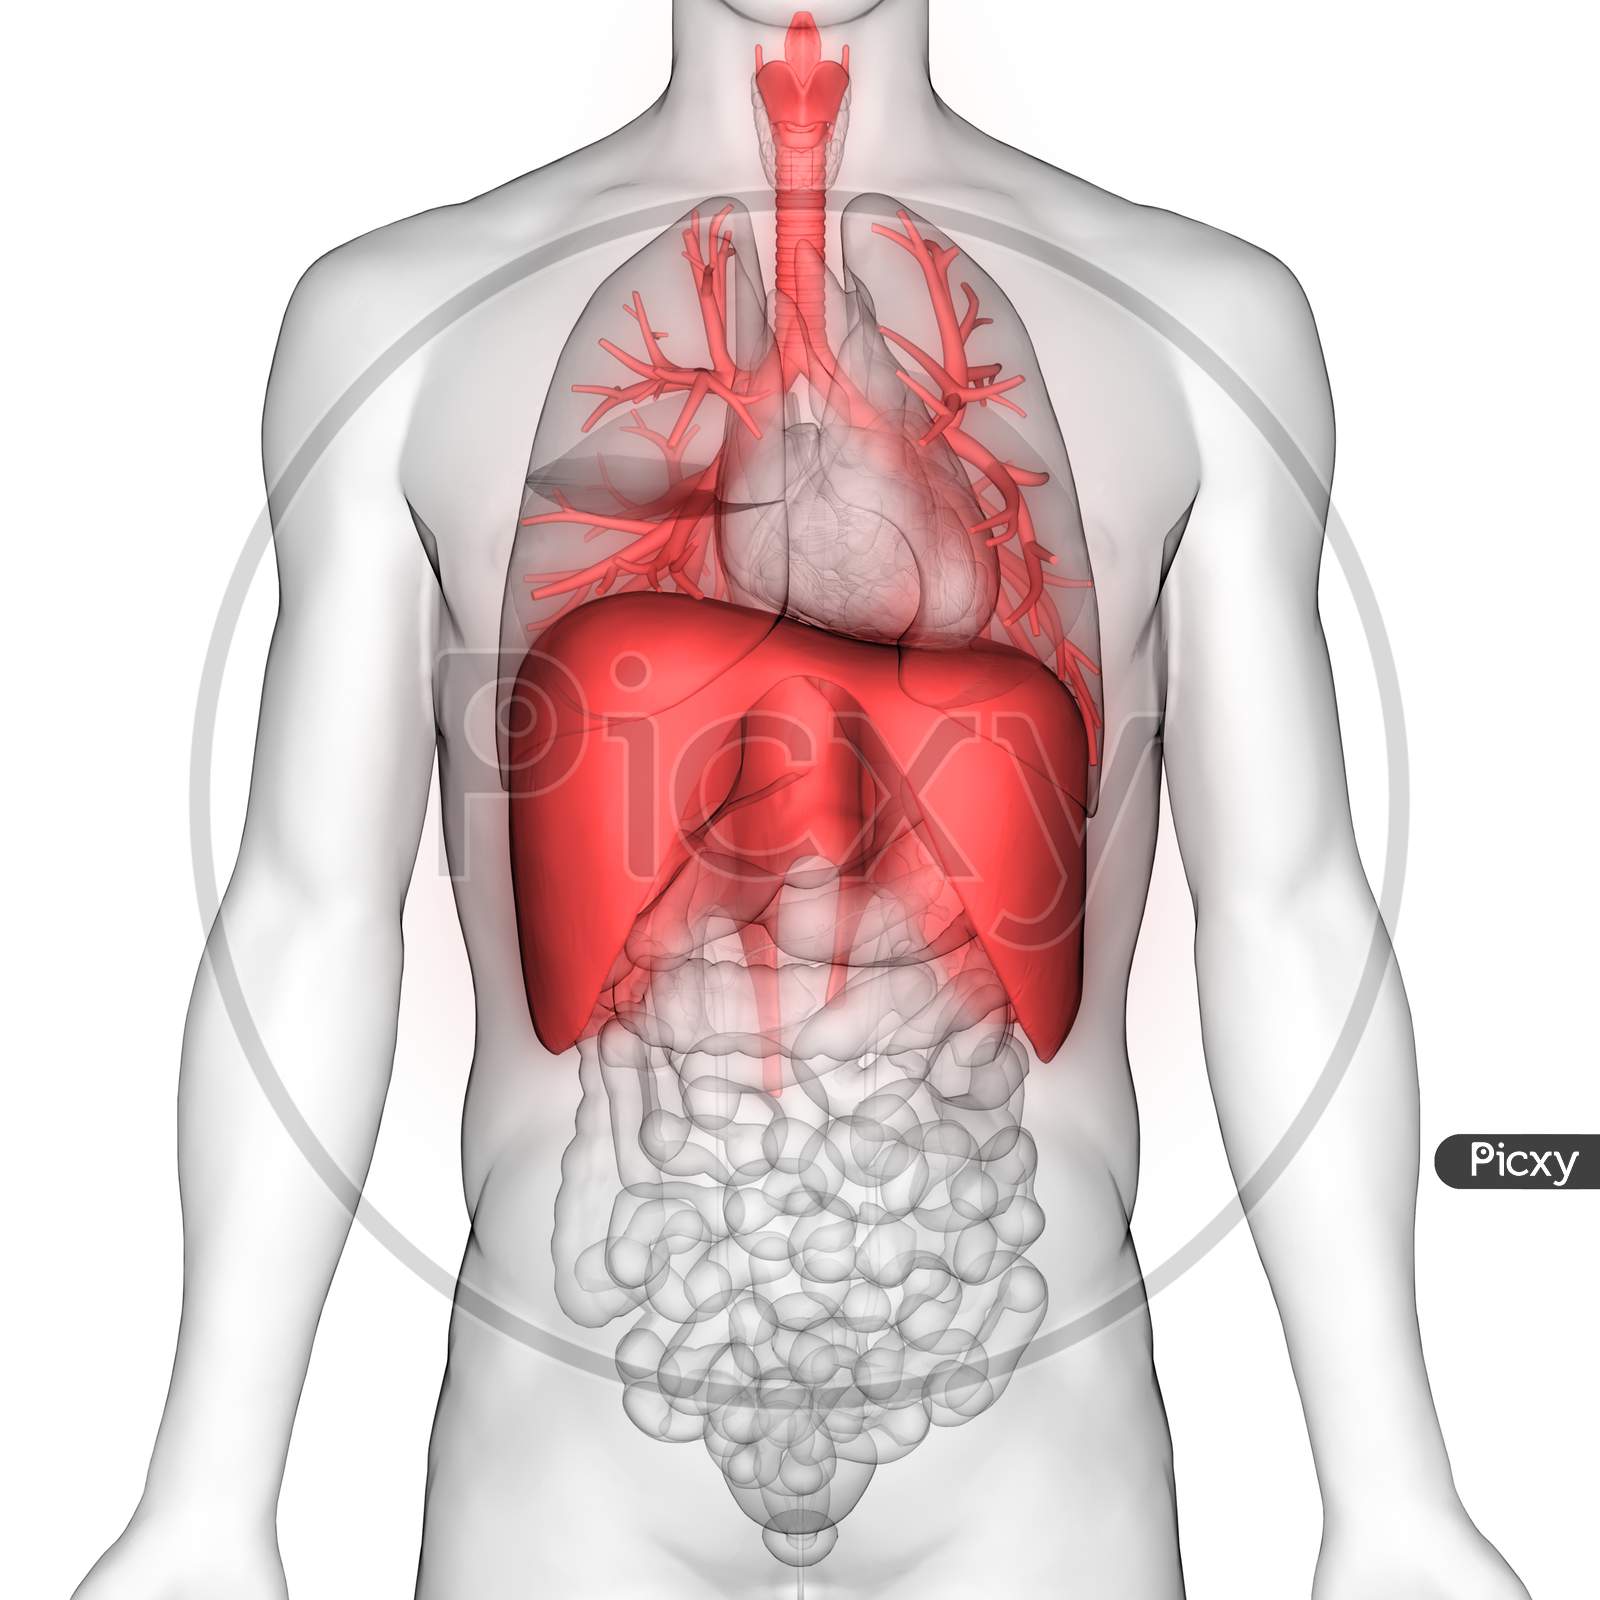 diaphragm diagram human body